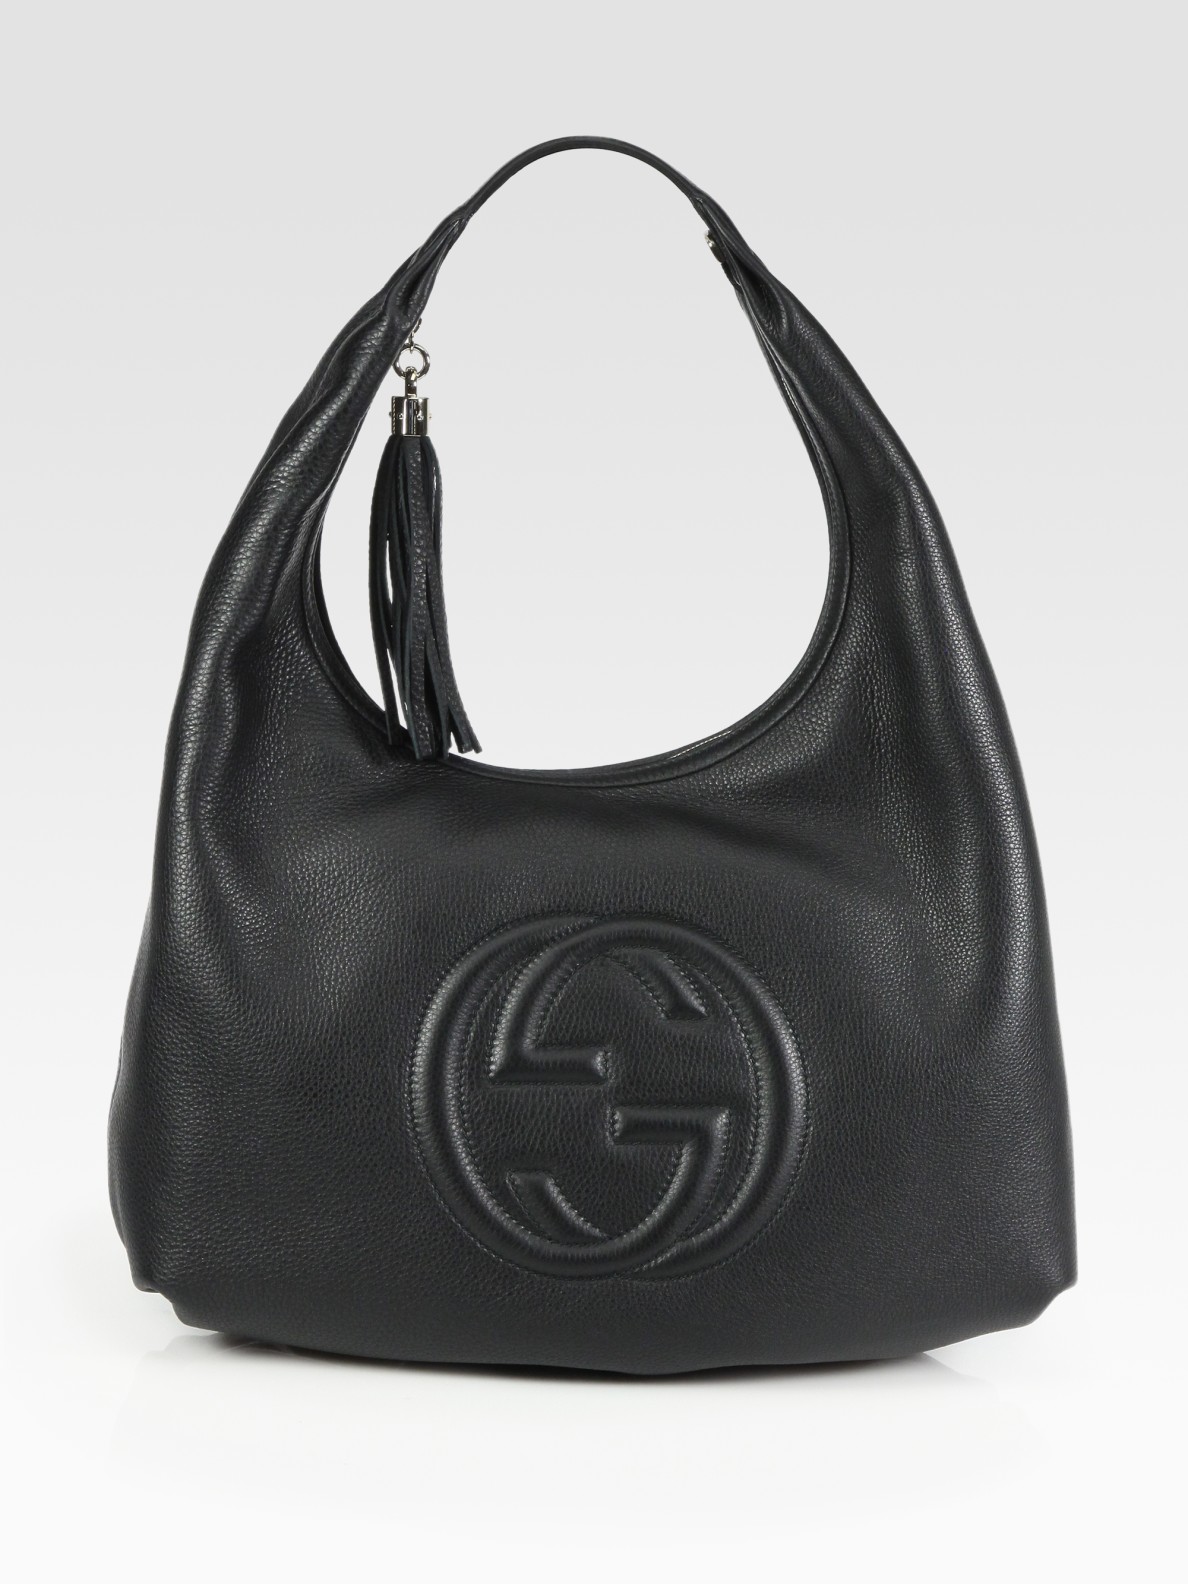 Gucci Soho Medium Hobo Bag in Black | Lyst